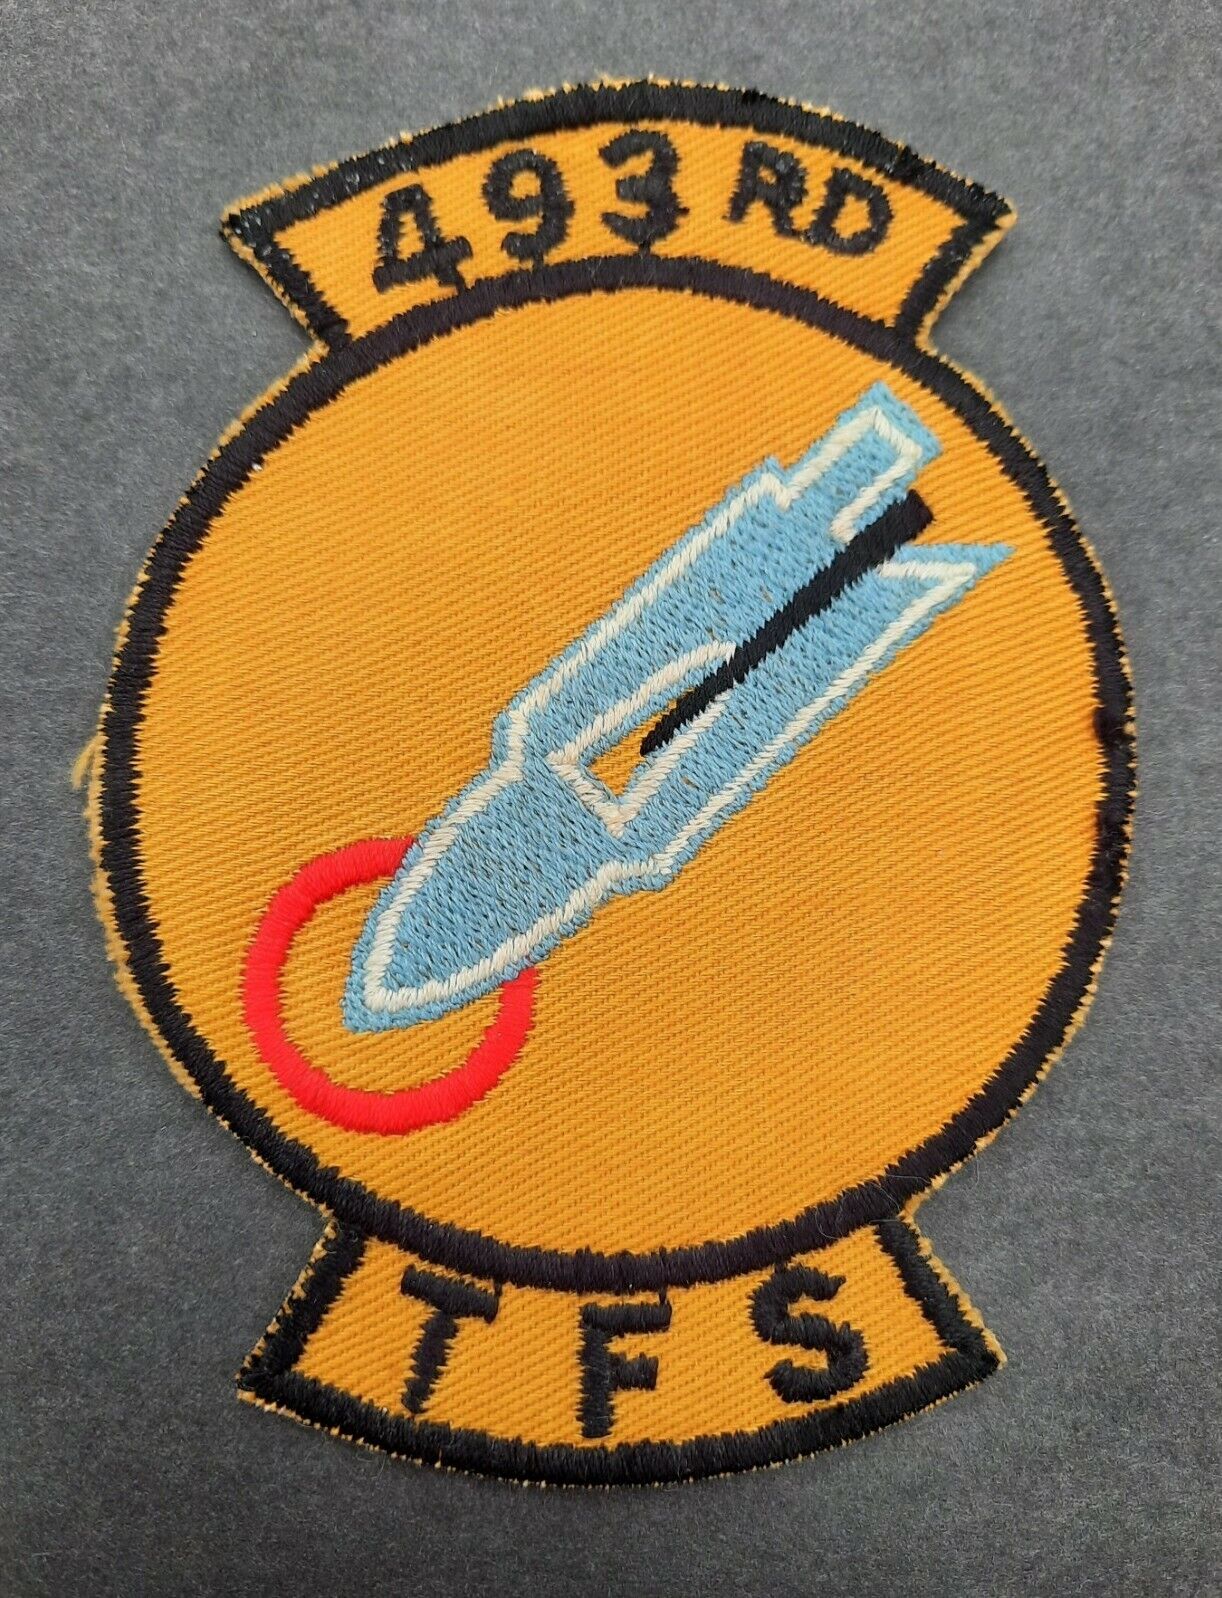 Original USAF Patch 493rd TFS Tactical Fighter Squadron RAF Lakenheath F-111